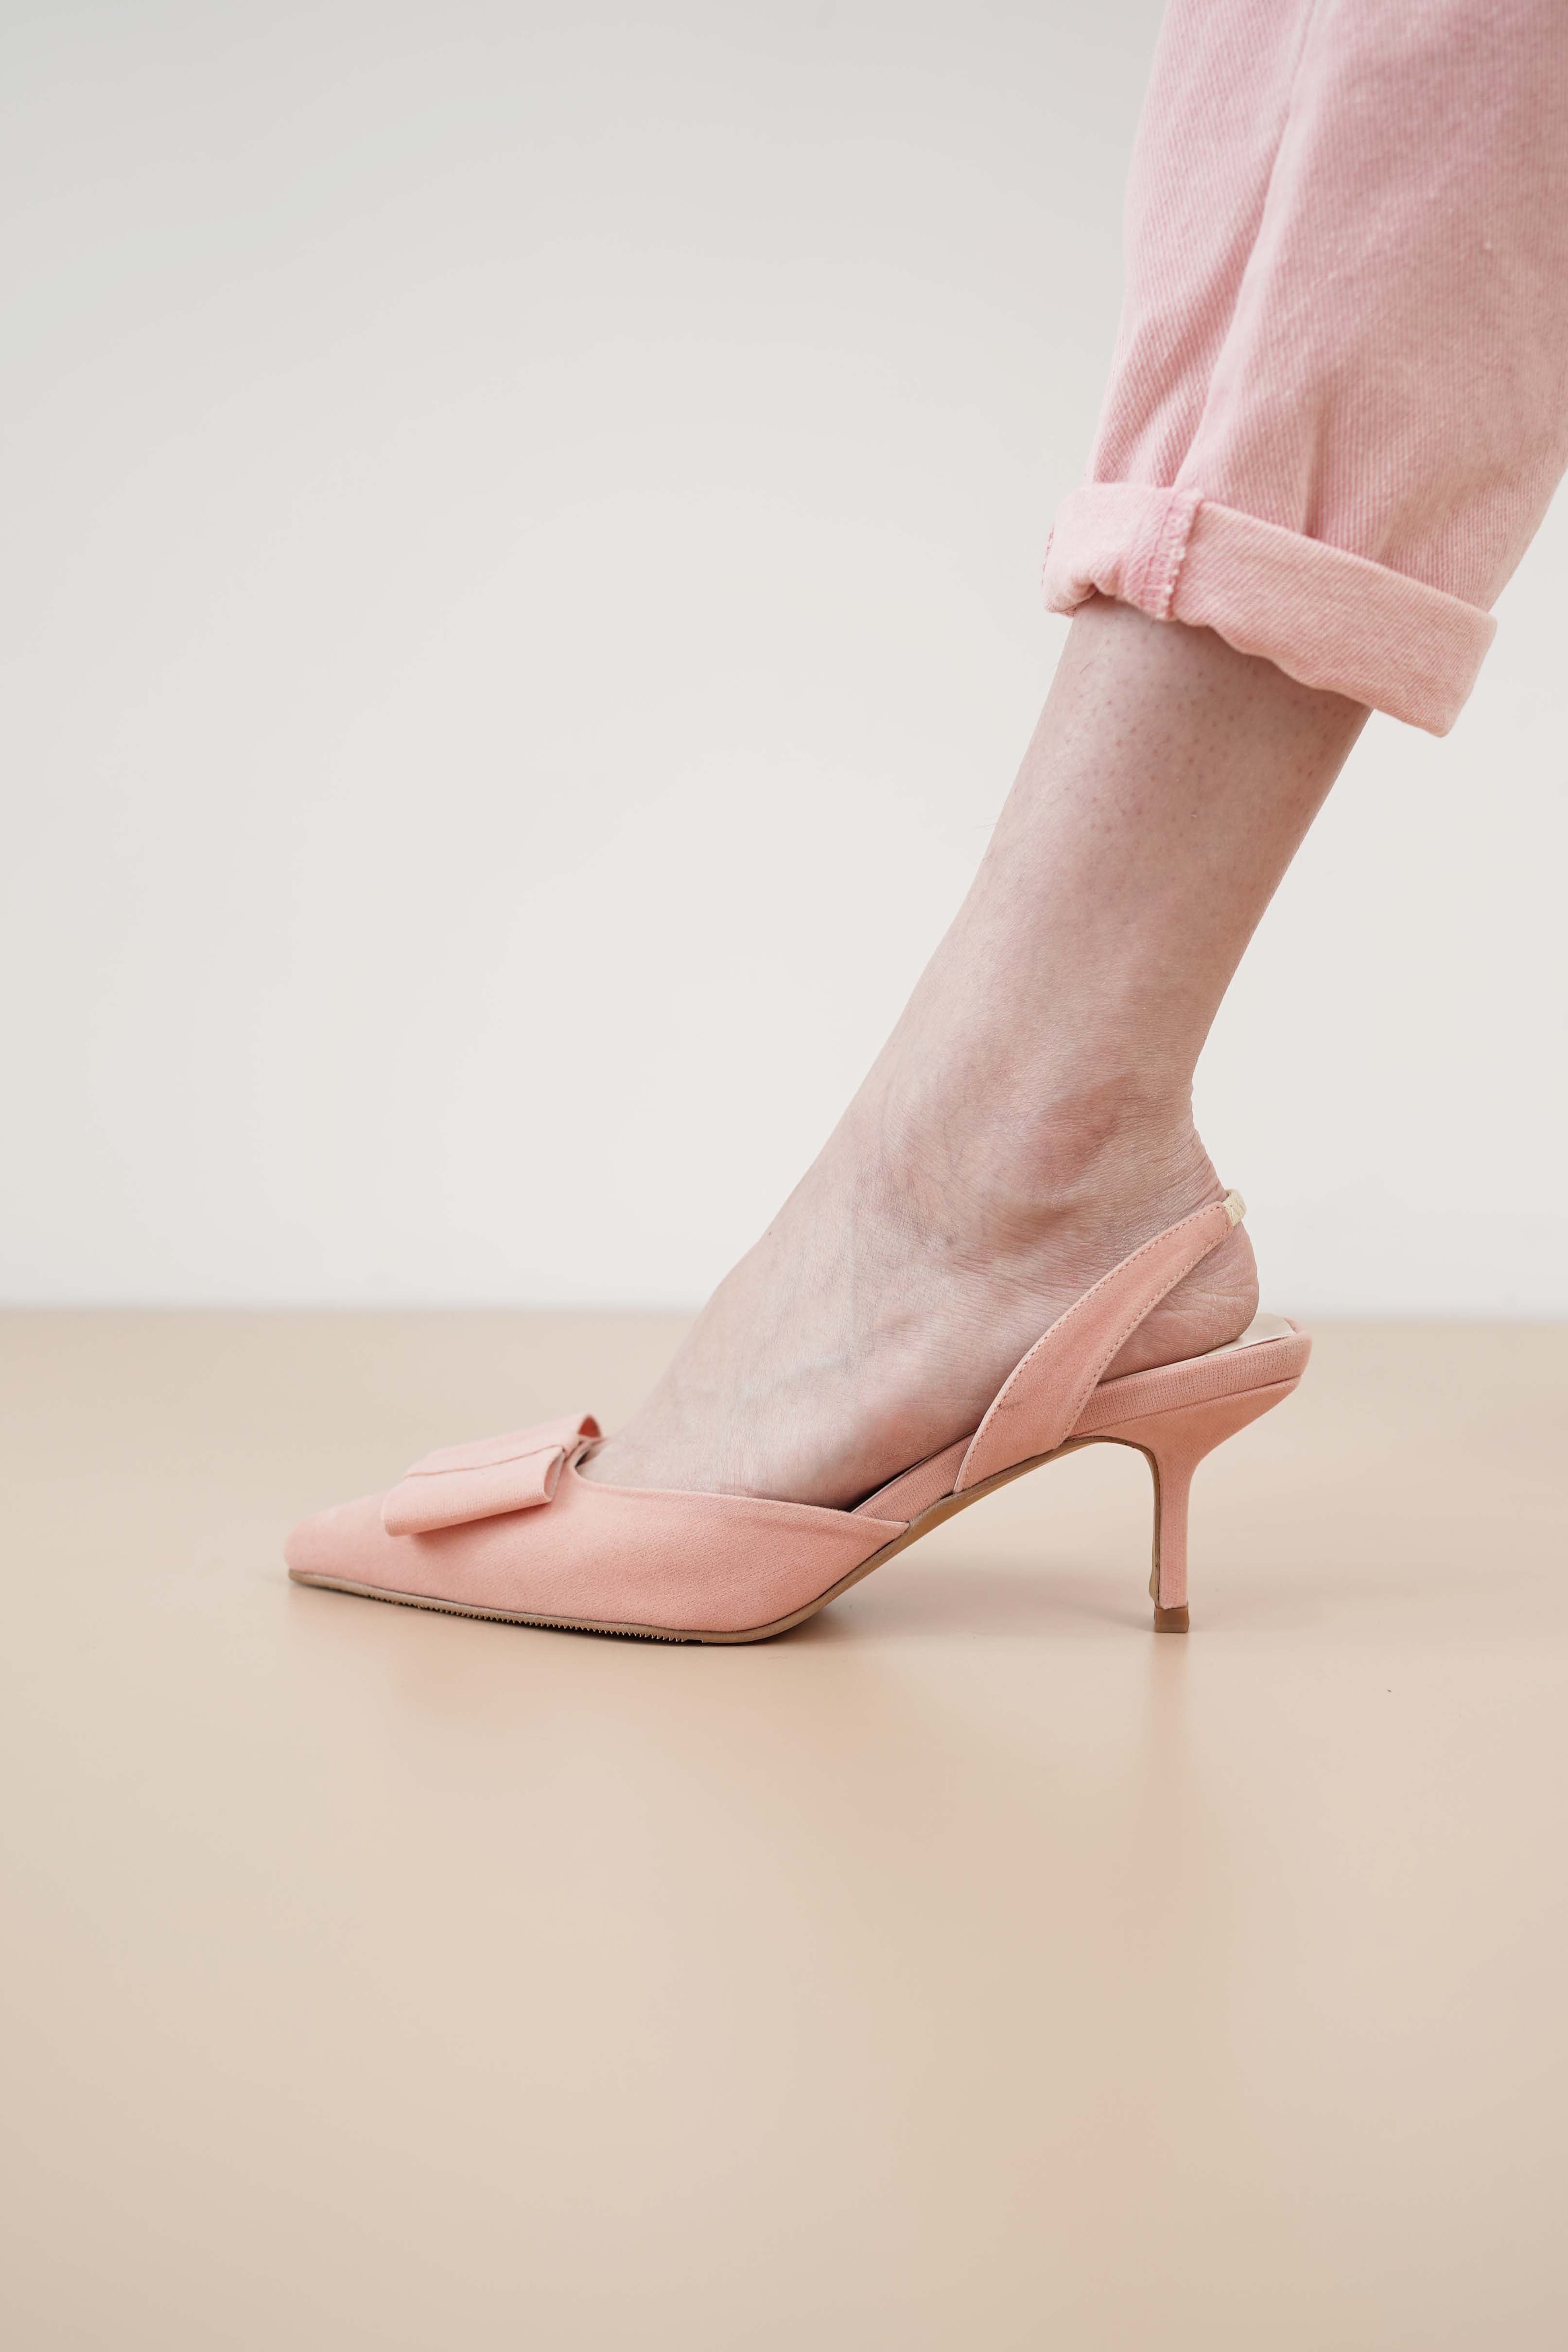 Gilena Heels in Blush Pink